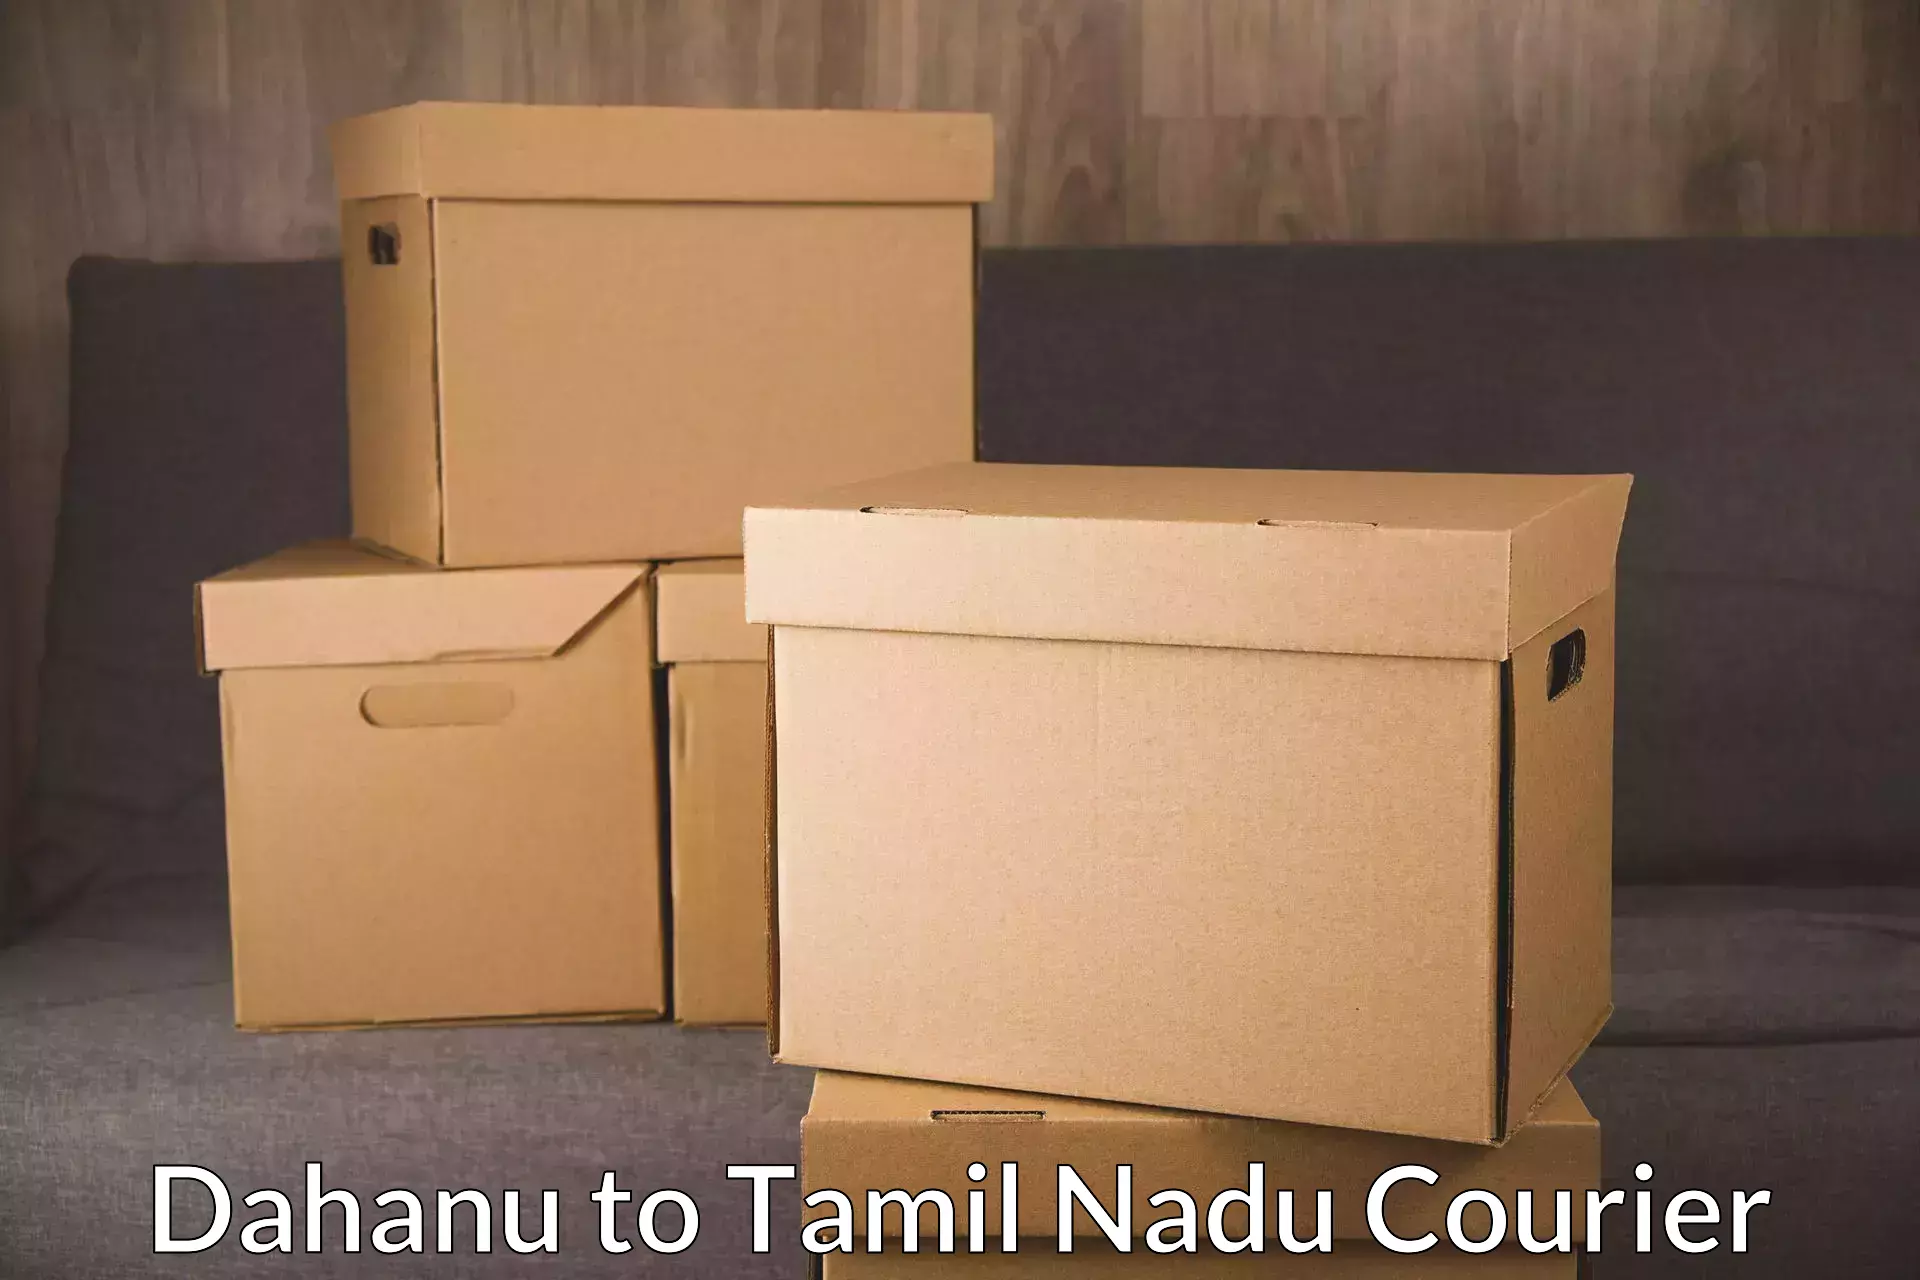 Cash on delivery service Dahanu to Tamil Nadu